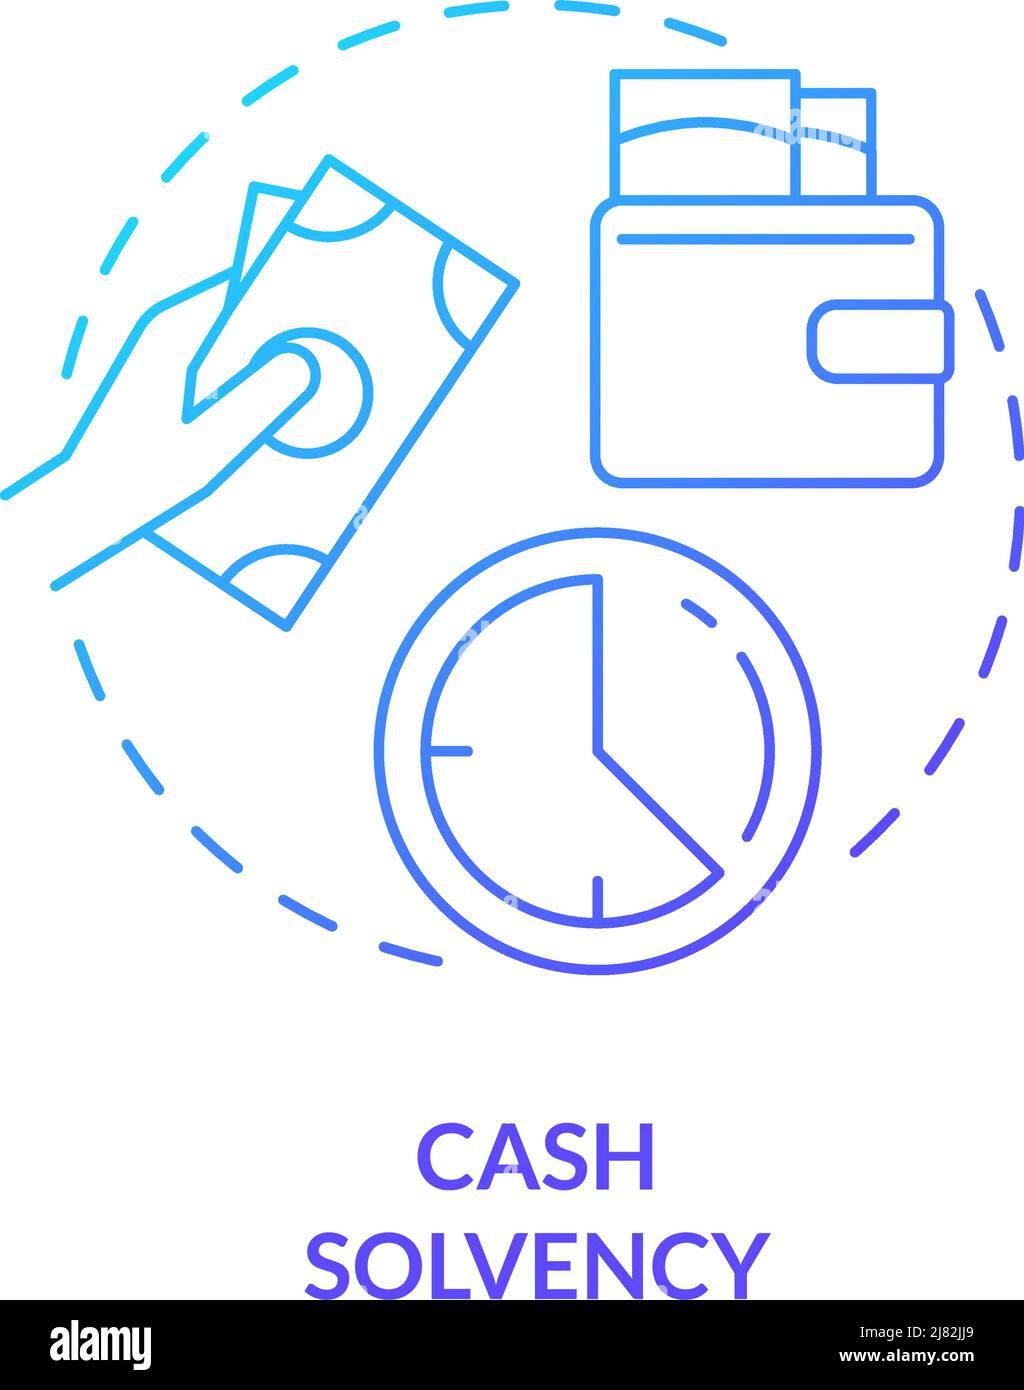 Cash solvency blue gradient concept icon Stock Vector